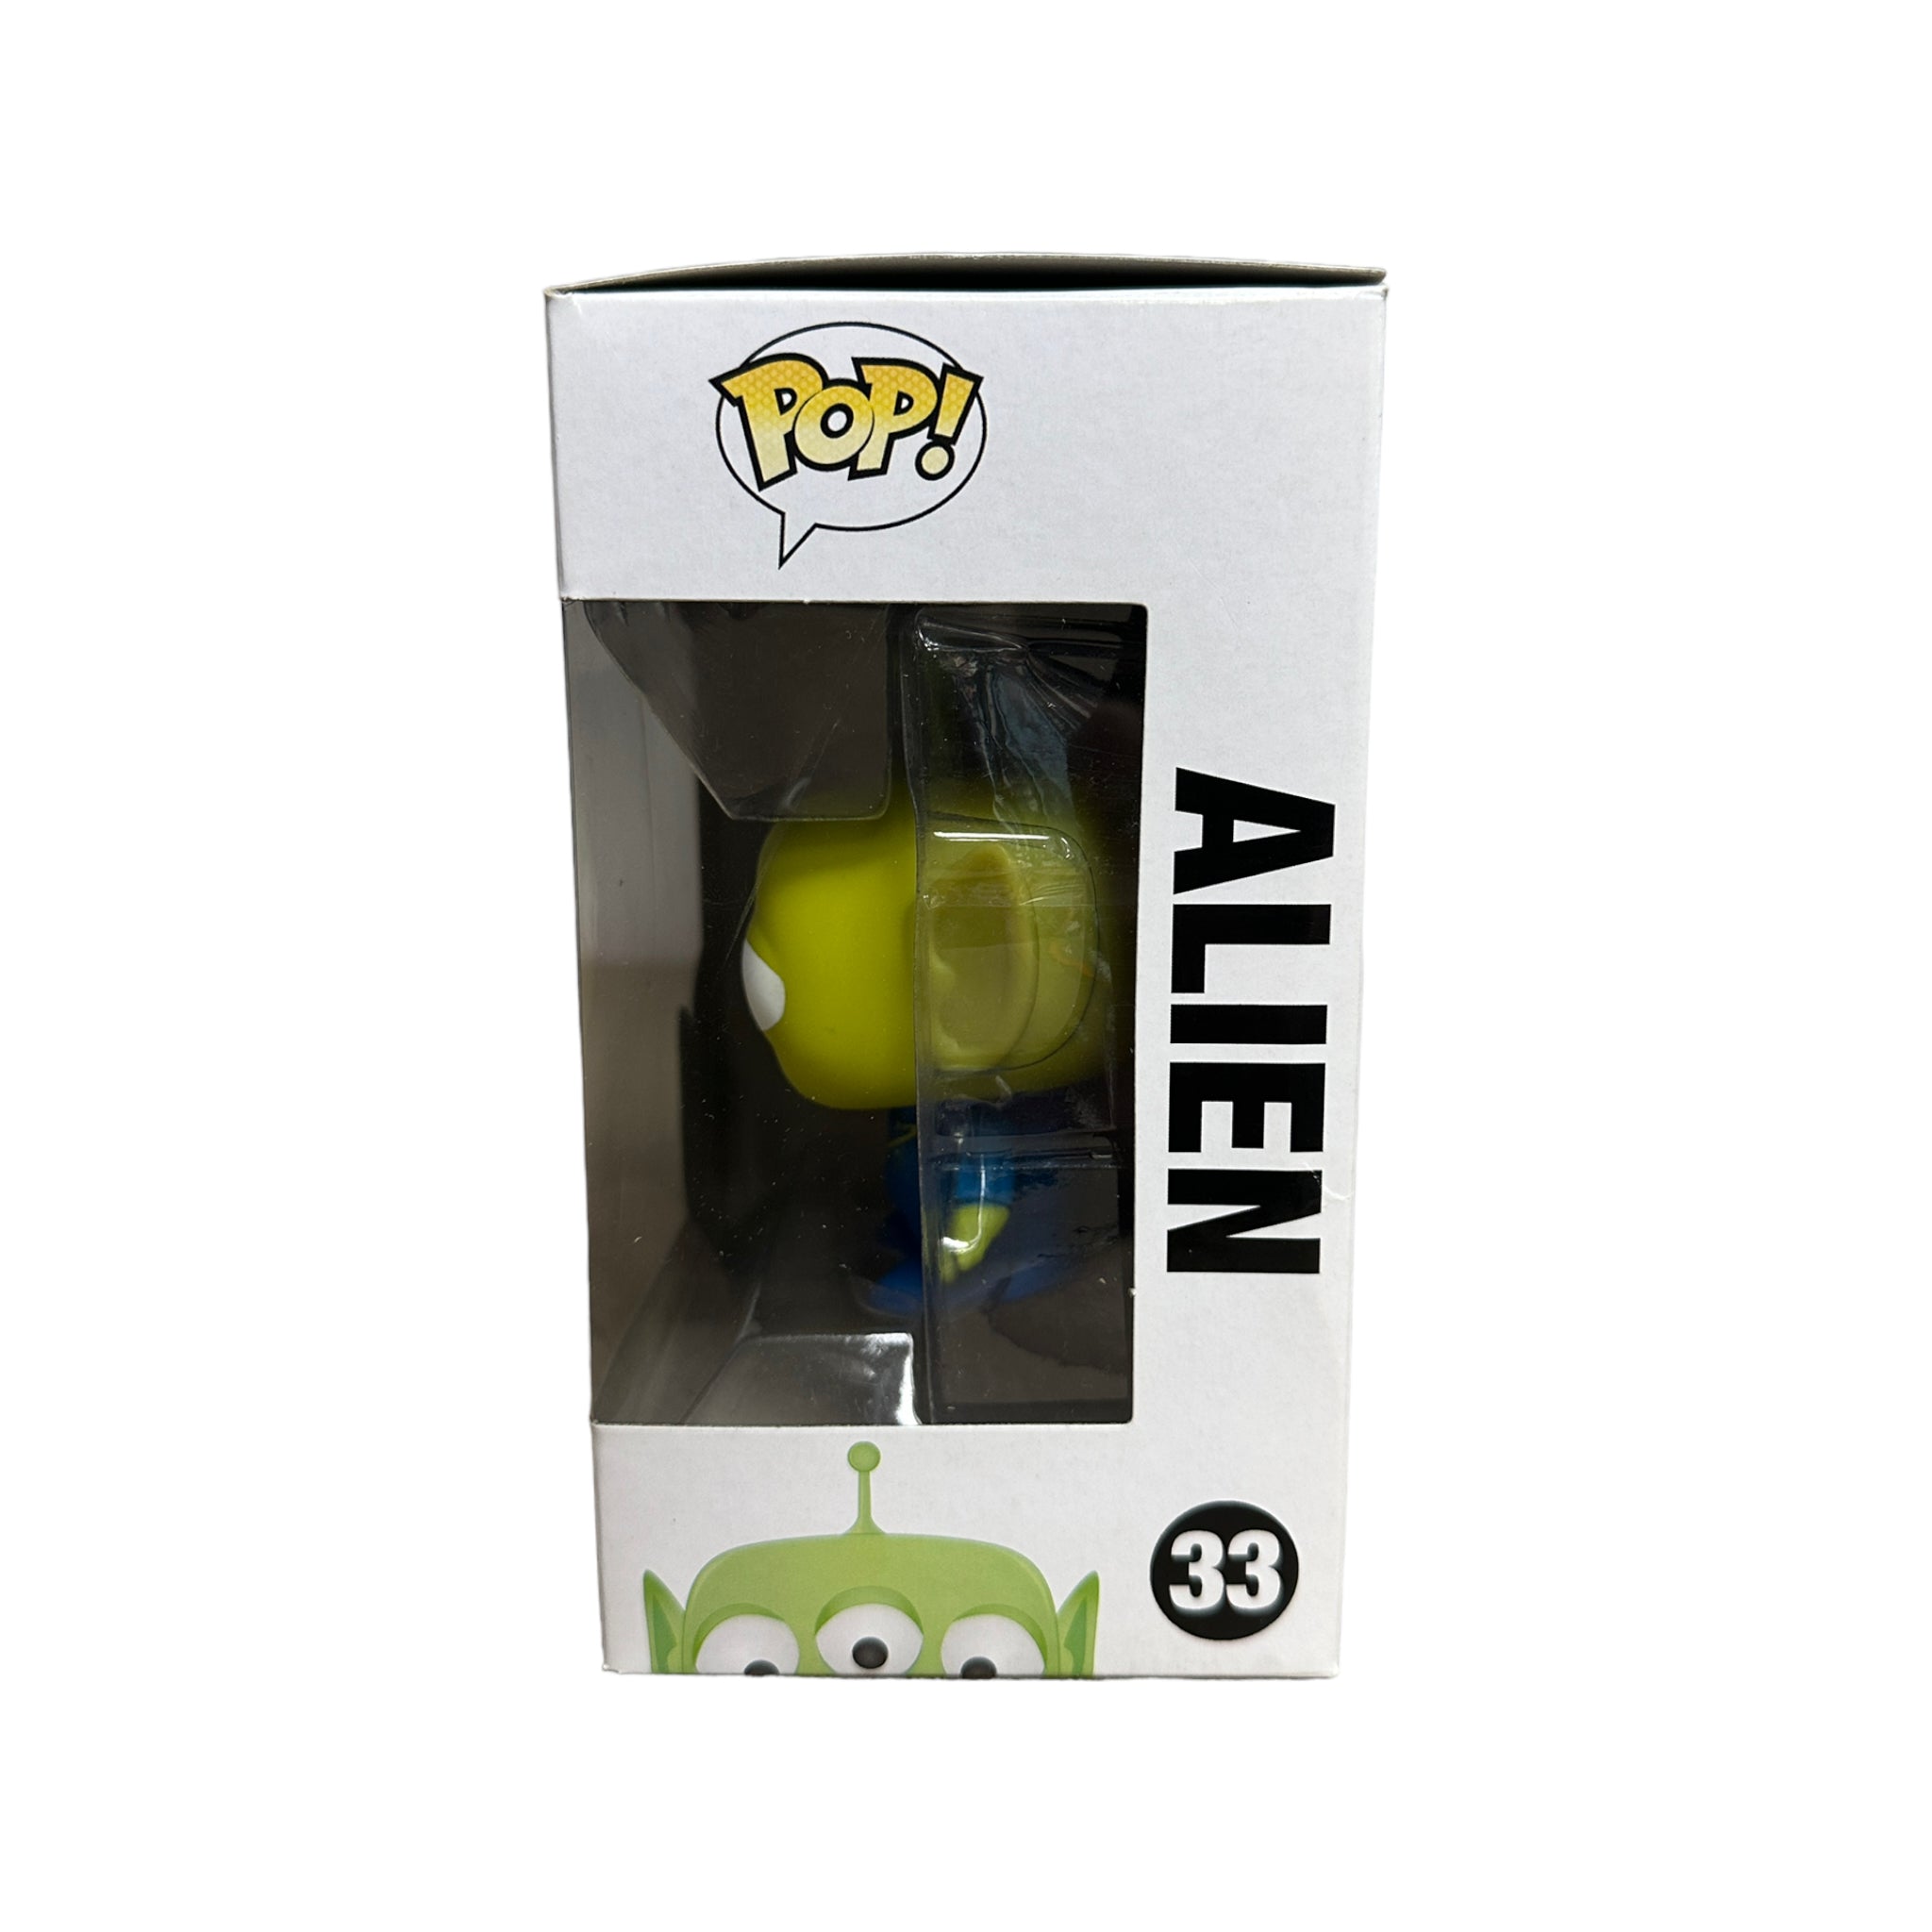 Alien #33 (Disney Store Logo) Funko Pop! - Disney Series 3 - 2011 Pop! - Condition 7.5/10